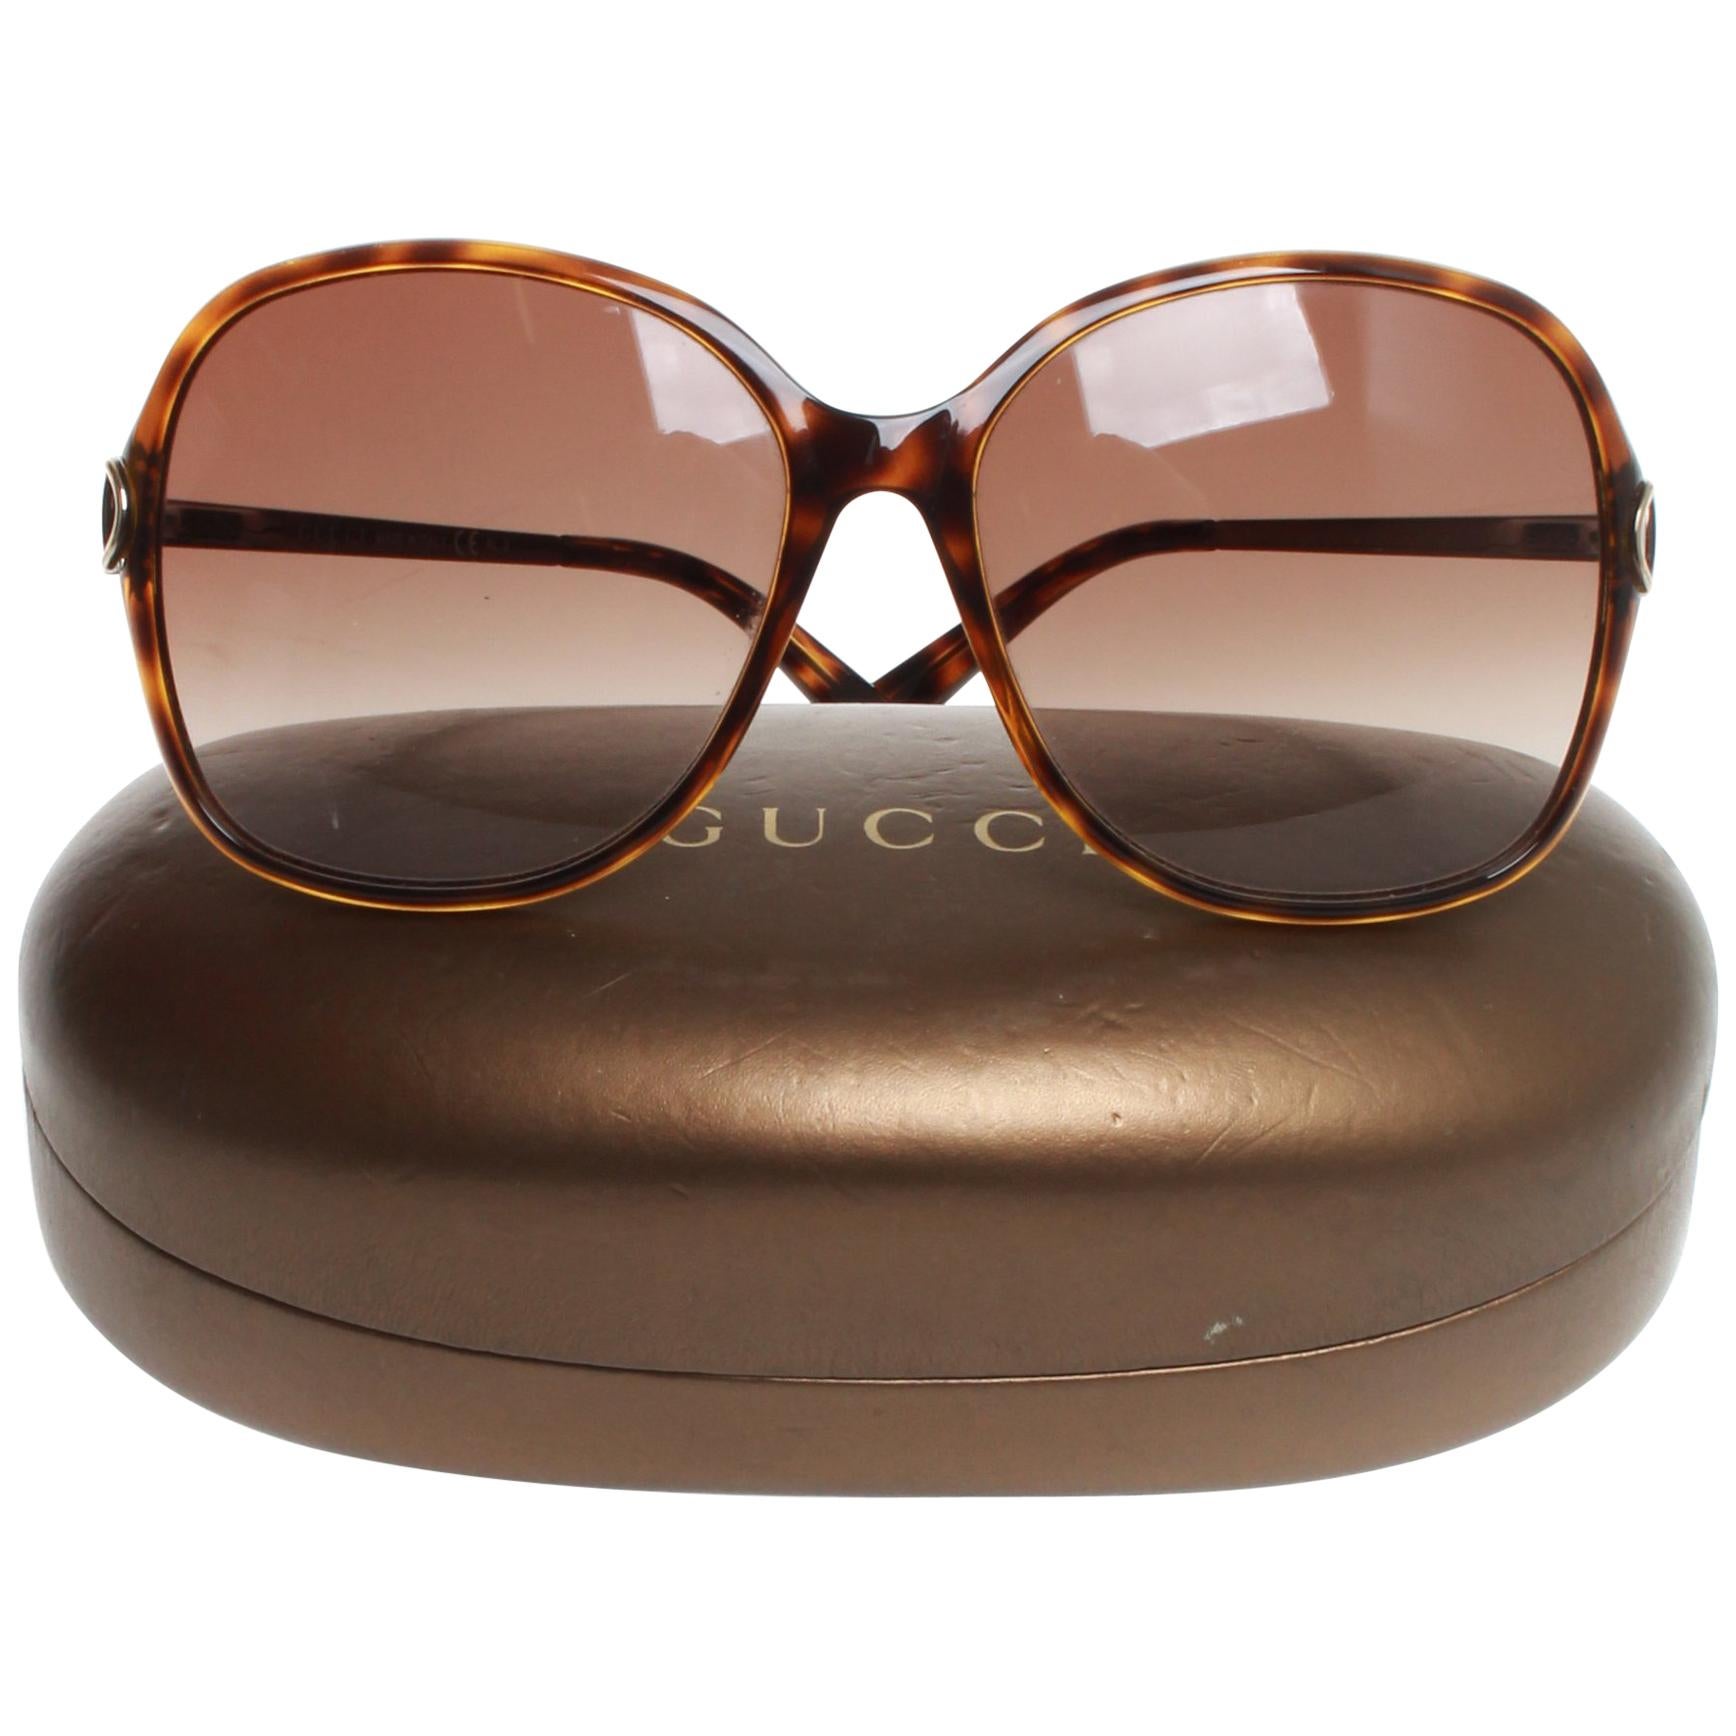 Gucci brown tortoiseshell sunglasses 